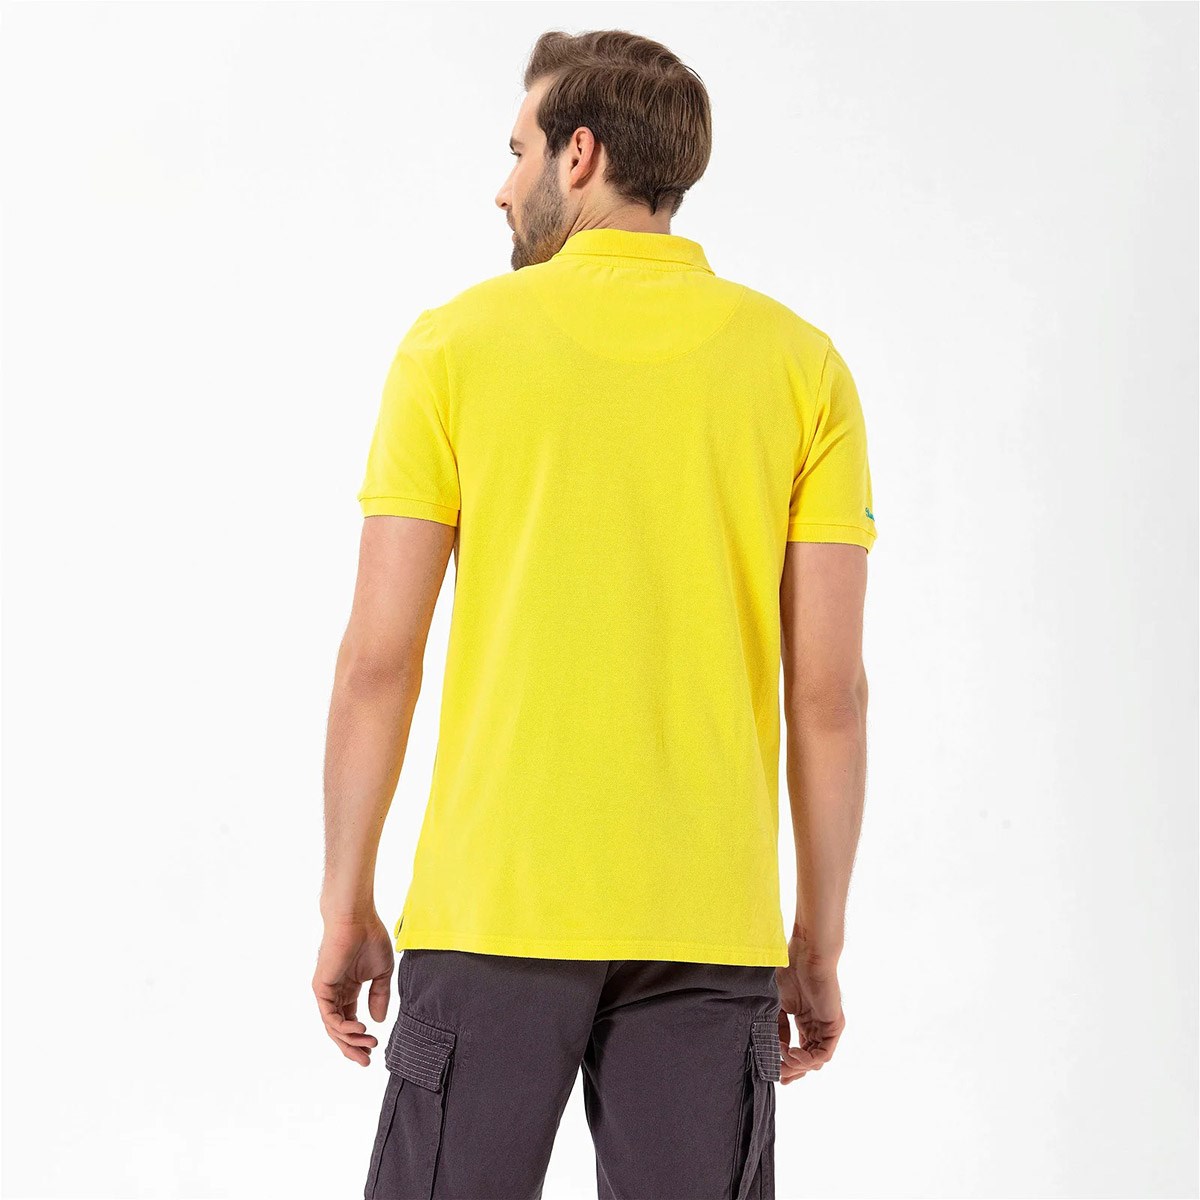 Routefield Post Erkek Polo T-shirt Yellow